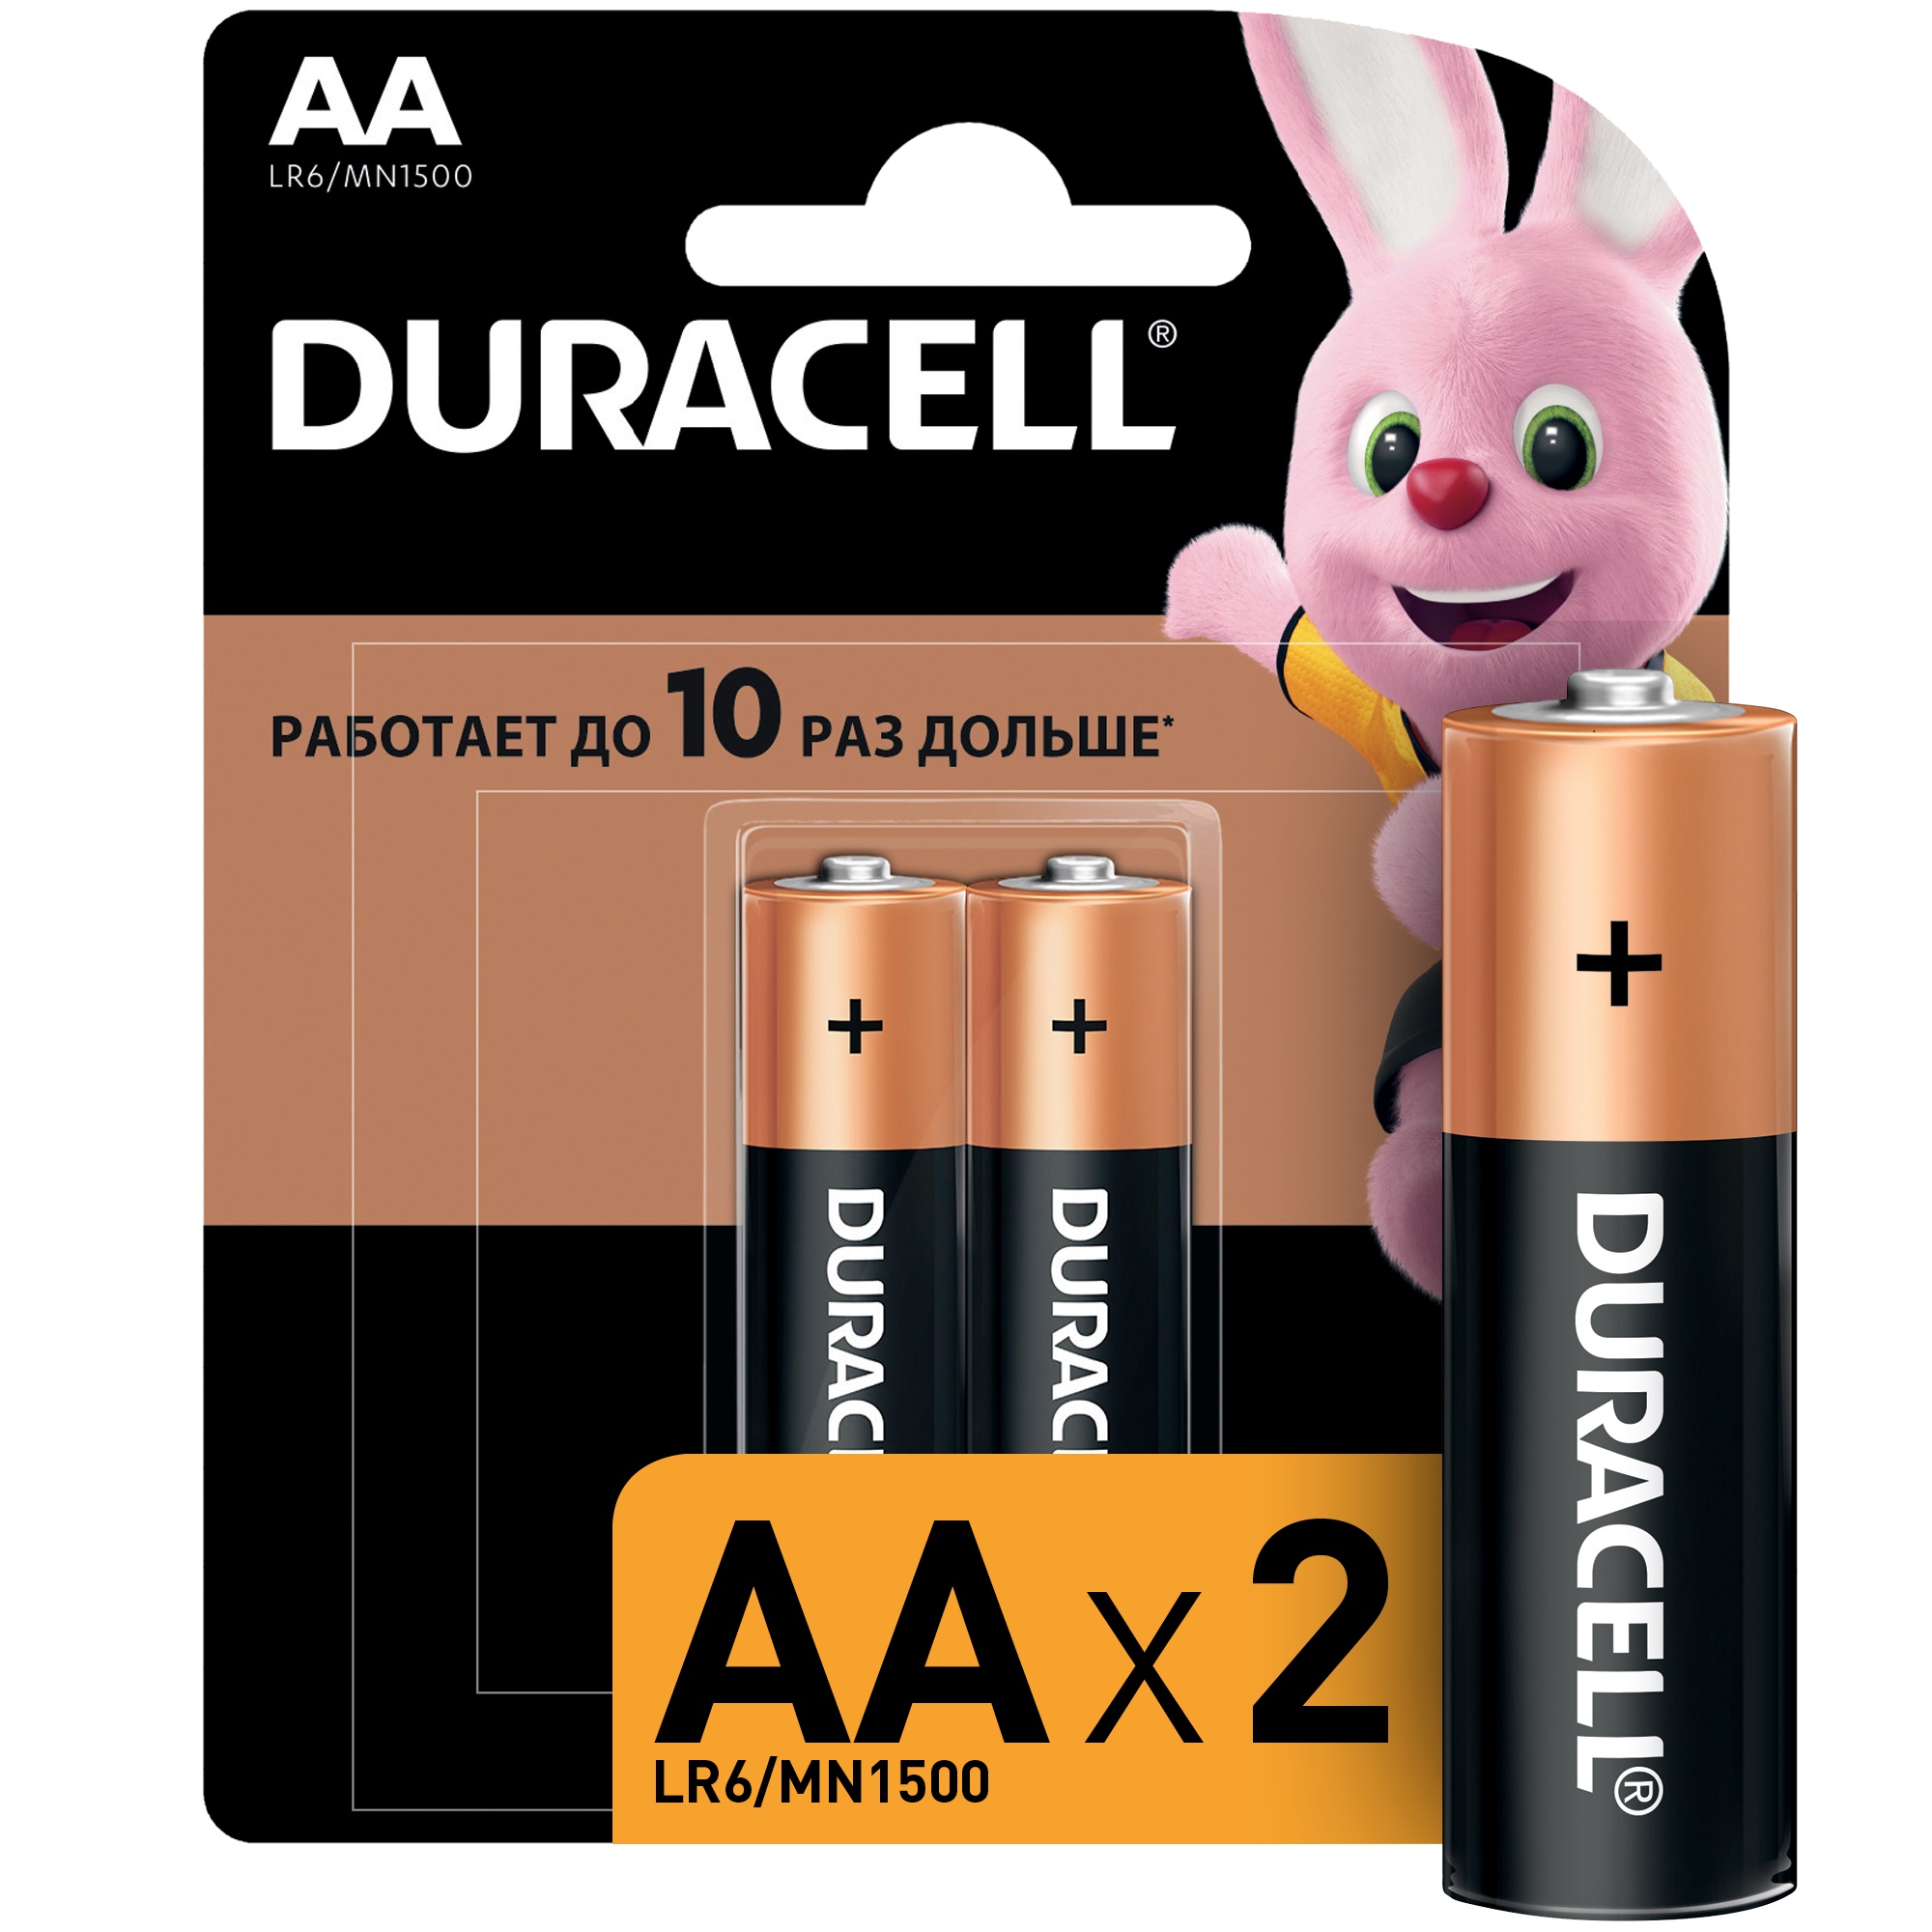 Батарейки Duracell LR6-2BL Basic АА 2шт батарейки duracell lr6 2bl basic аа 2шт